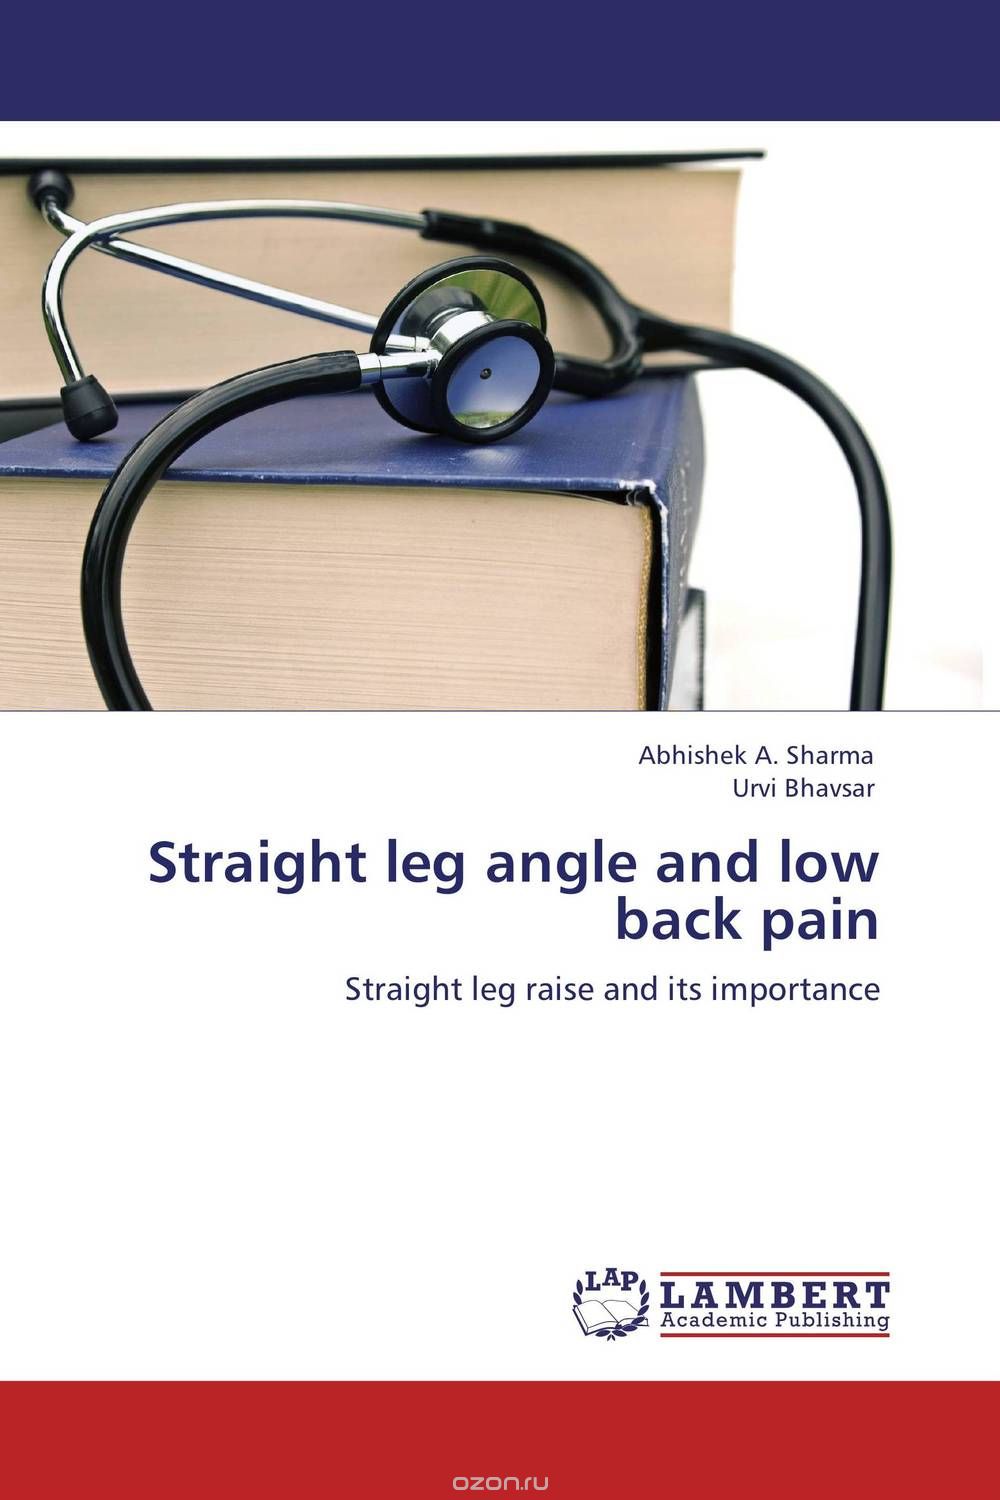 Скачать книгу "Straight leg angle and low back pain"